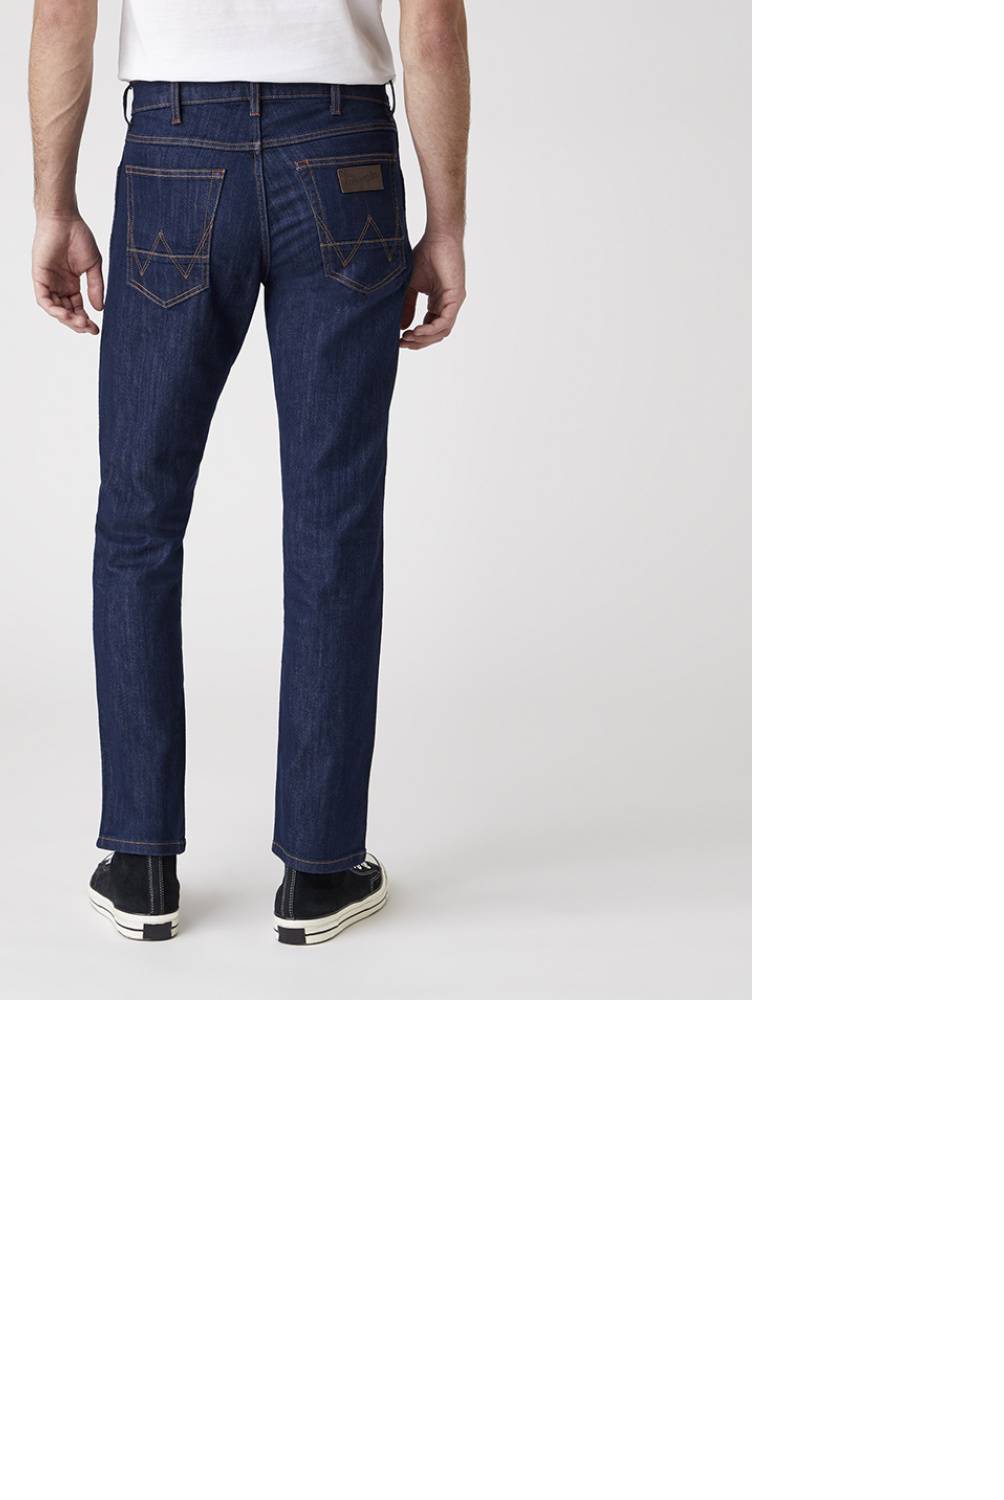 WRANGLER - Jeans Greensboro Regular Fit